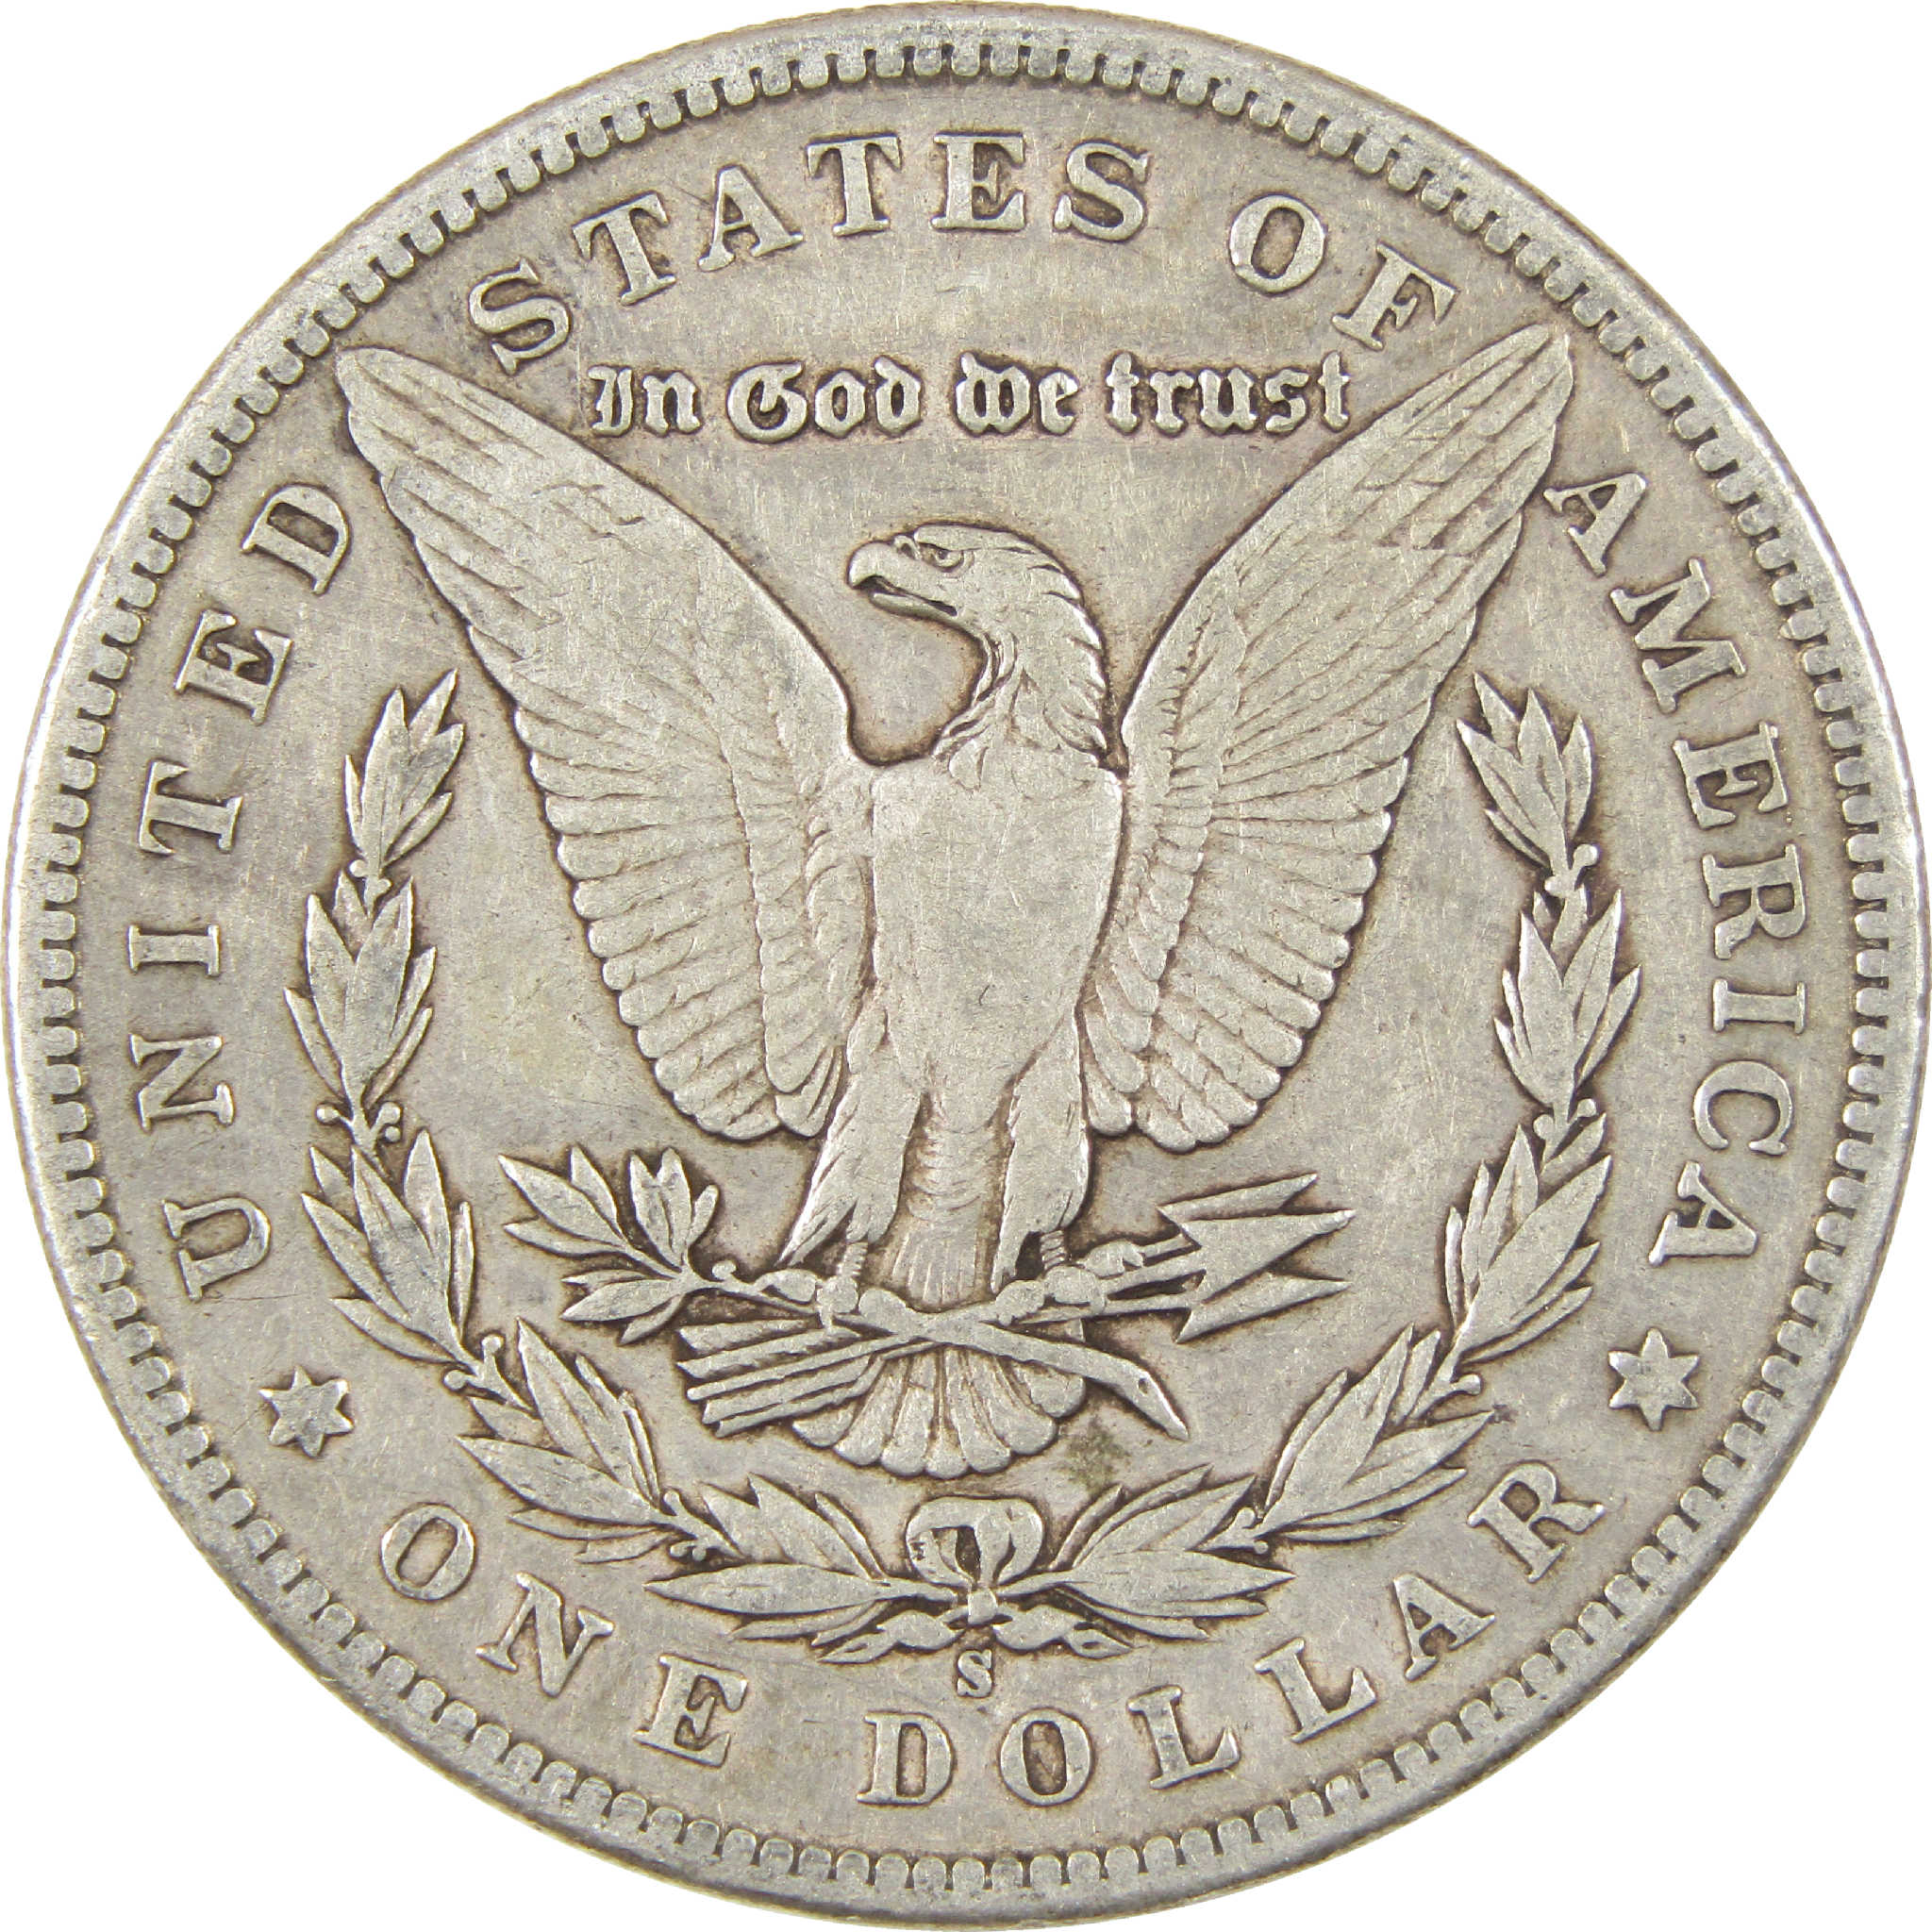 1897 S Morgan Dollar VF Very Fine Silver $1 Coin SKU:I11261 - Morgan coin - Morgan silver dollar - Morgan silver dollar for sale - Profile Coins &amp; Collectibles